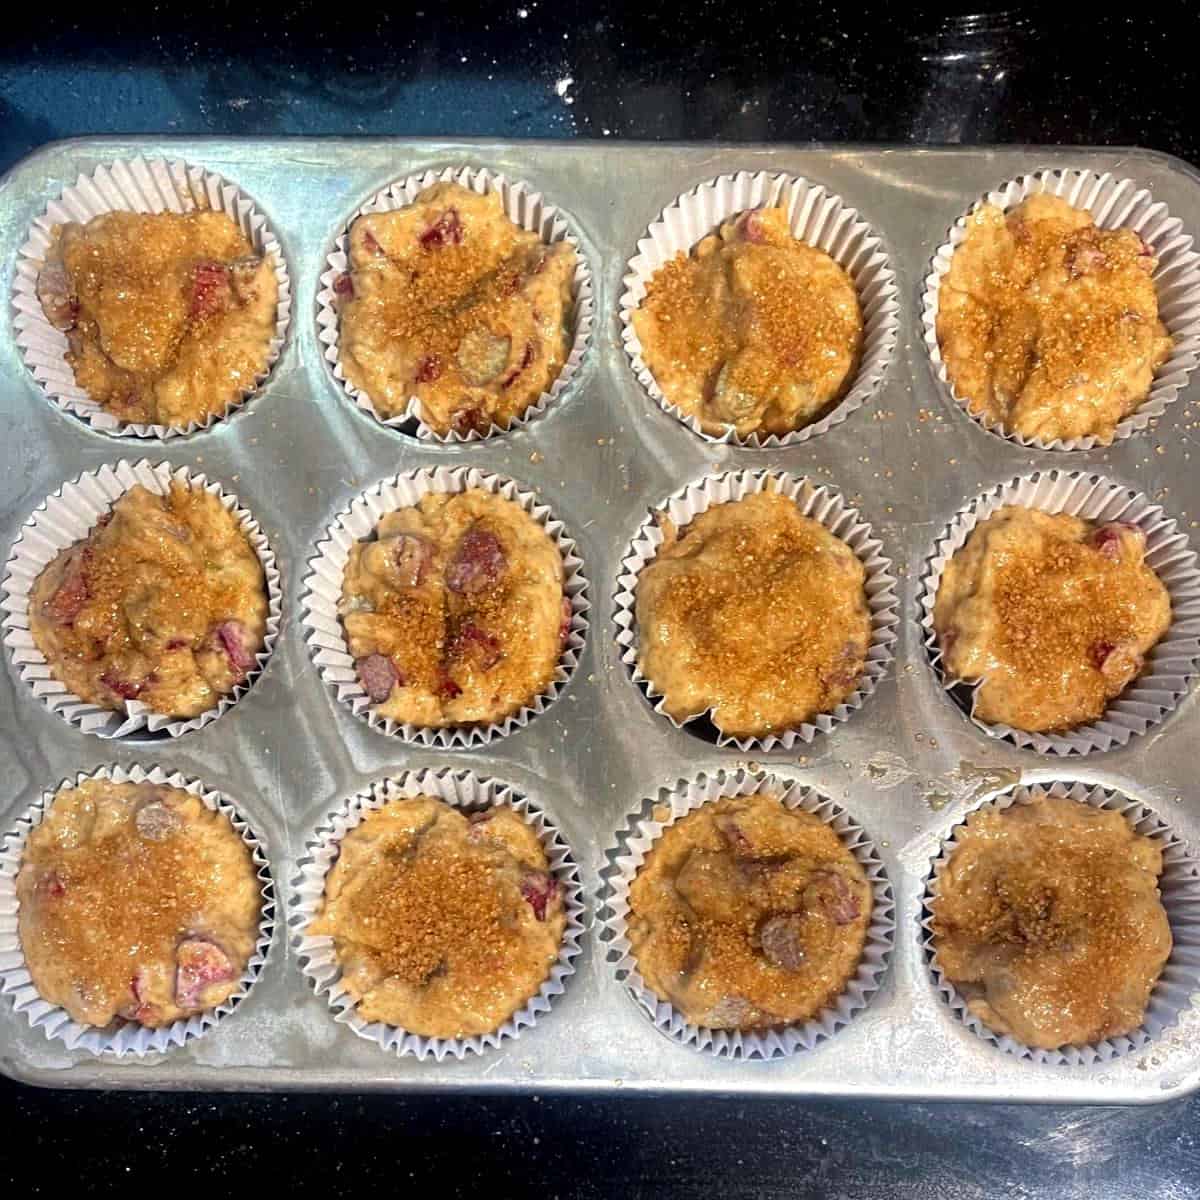 Vegan rhubarb muffins before baking in muffin tin.